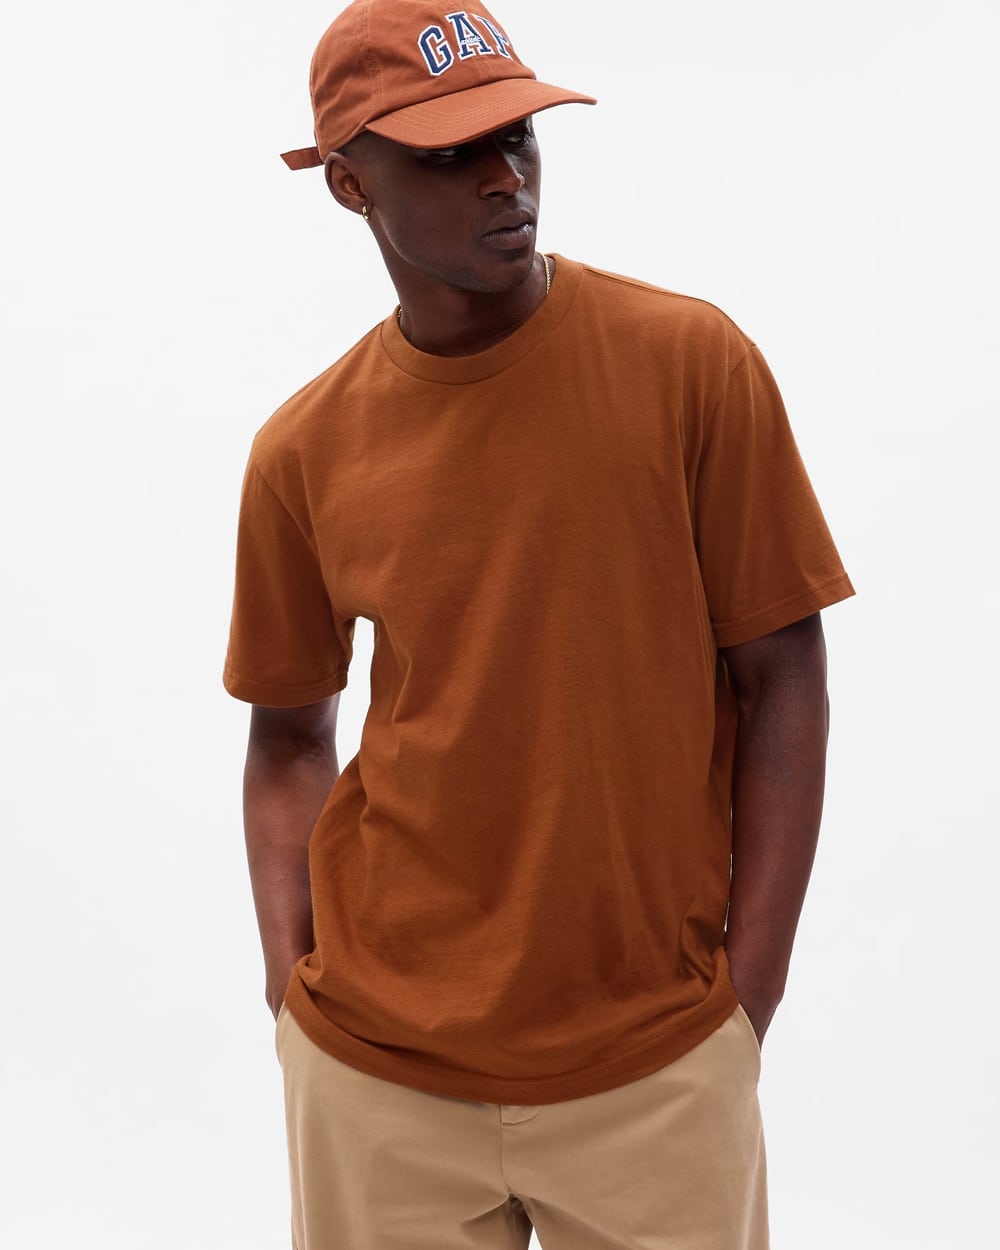 Man wearing a GAP brown T-shirt with khaki pants and a brown logo baseball cap